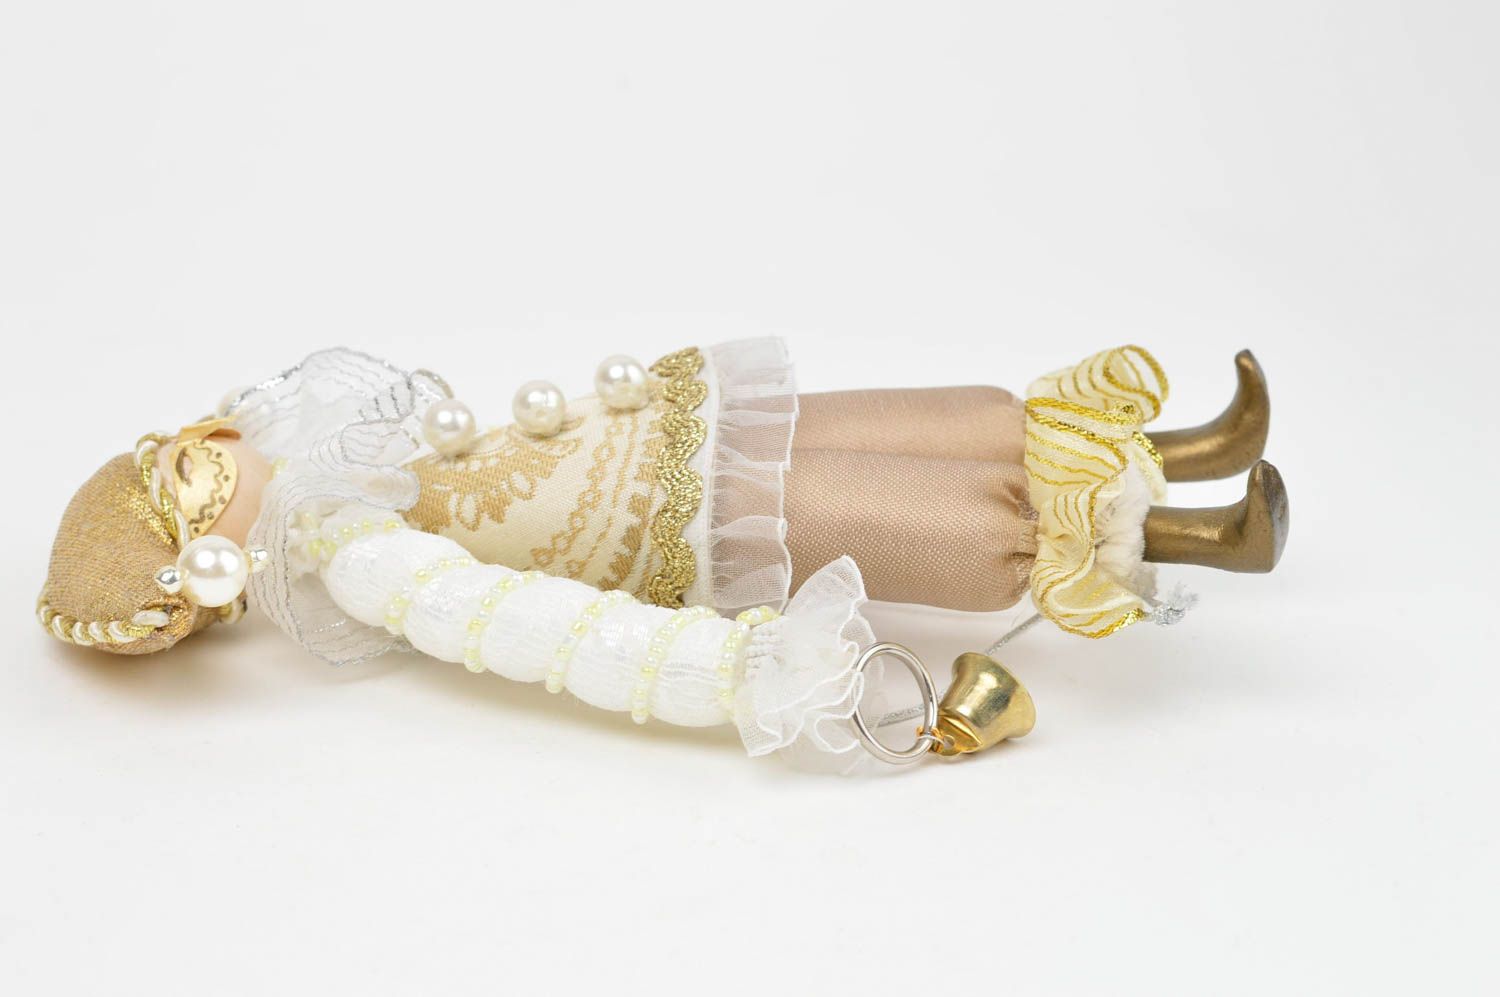 Handmade designer toy unusual textile doll stylish souvenir cute home decor photo 3